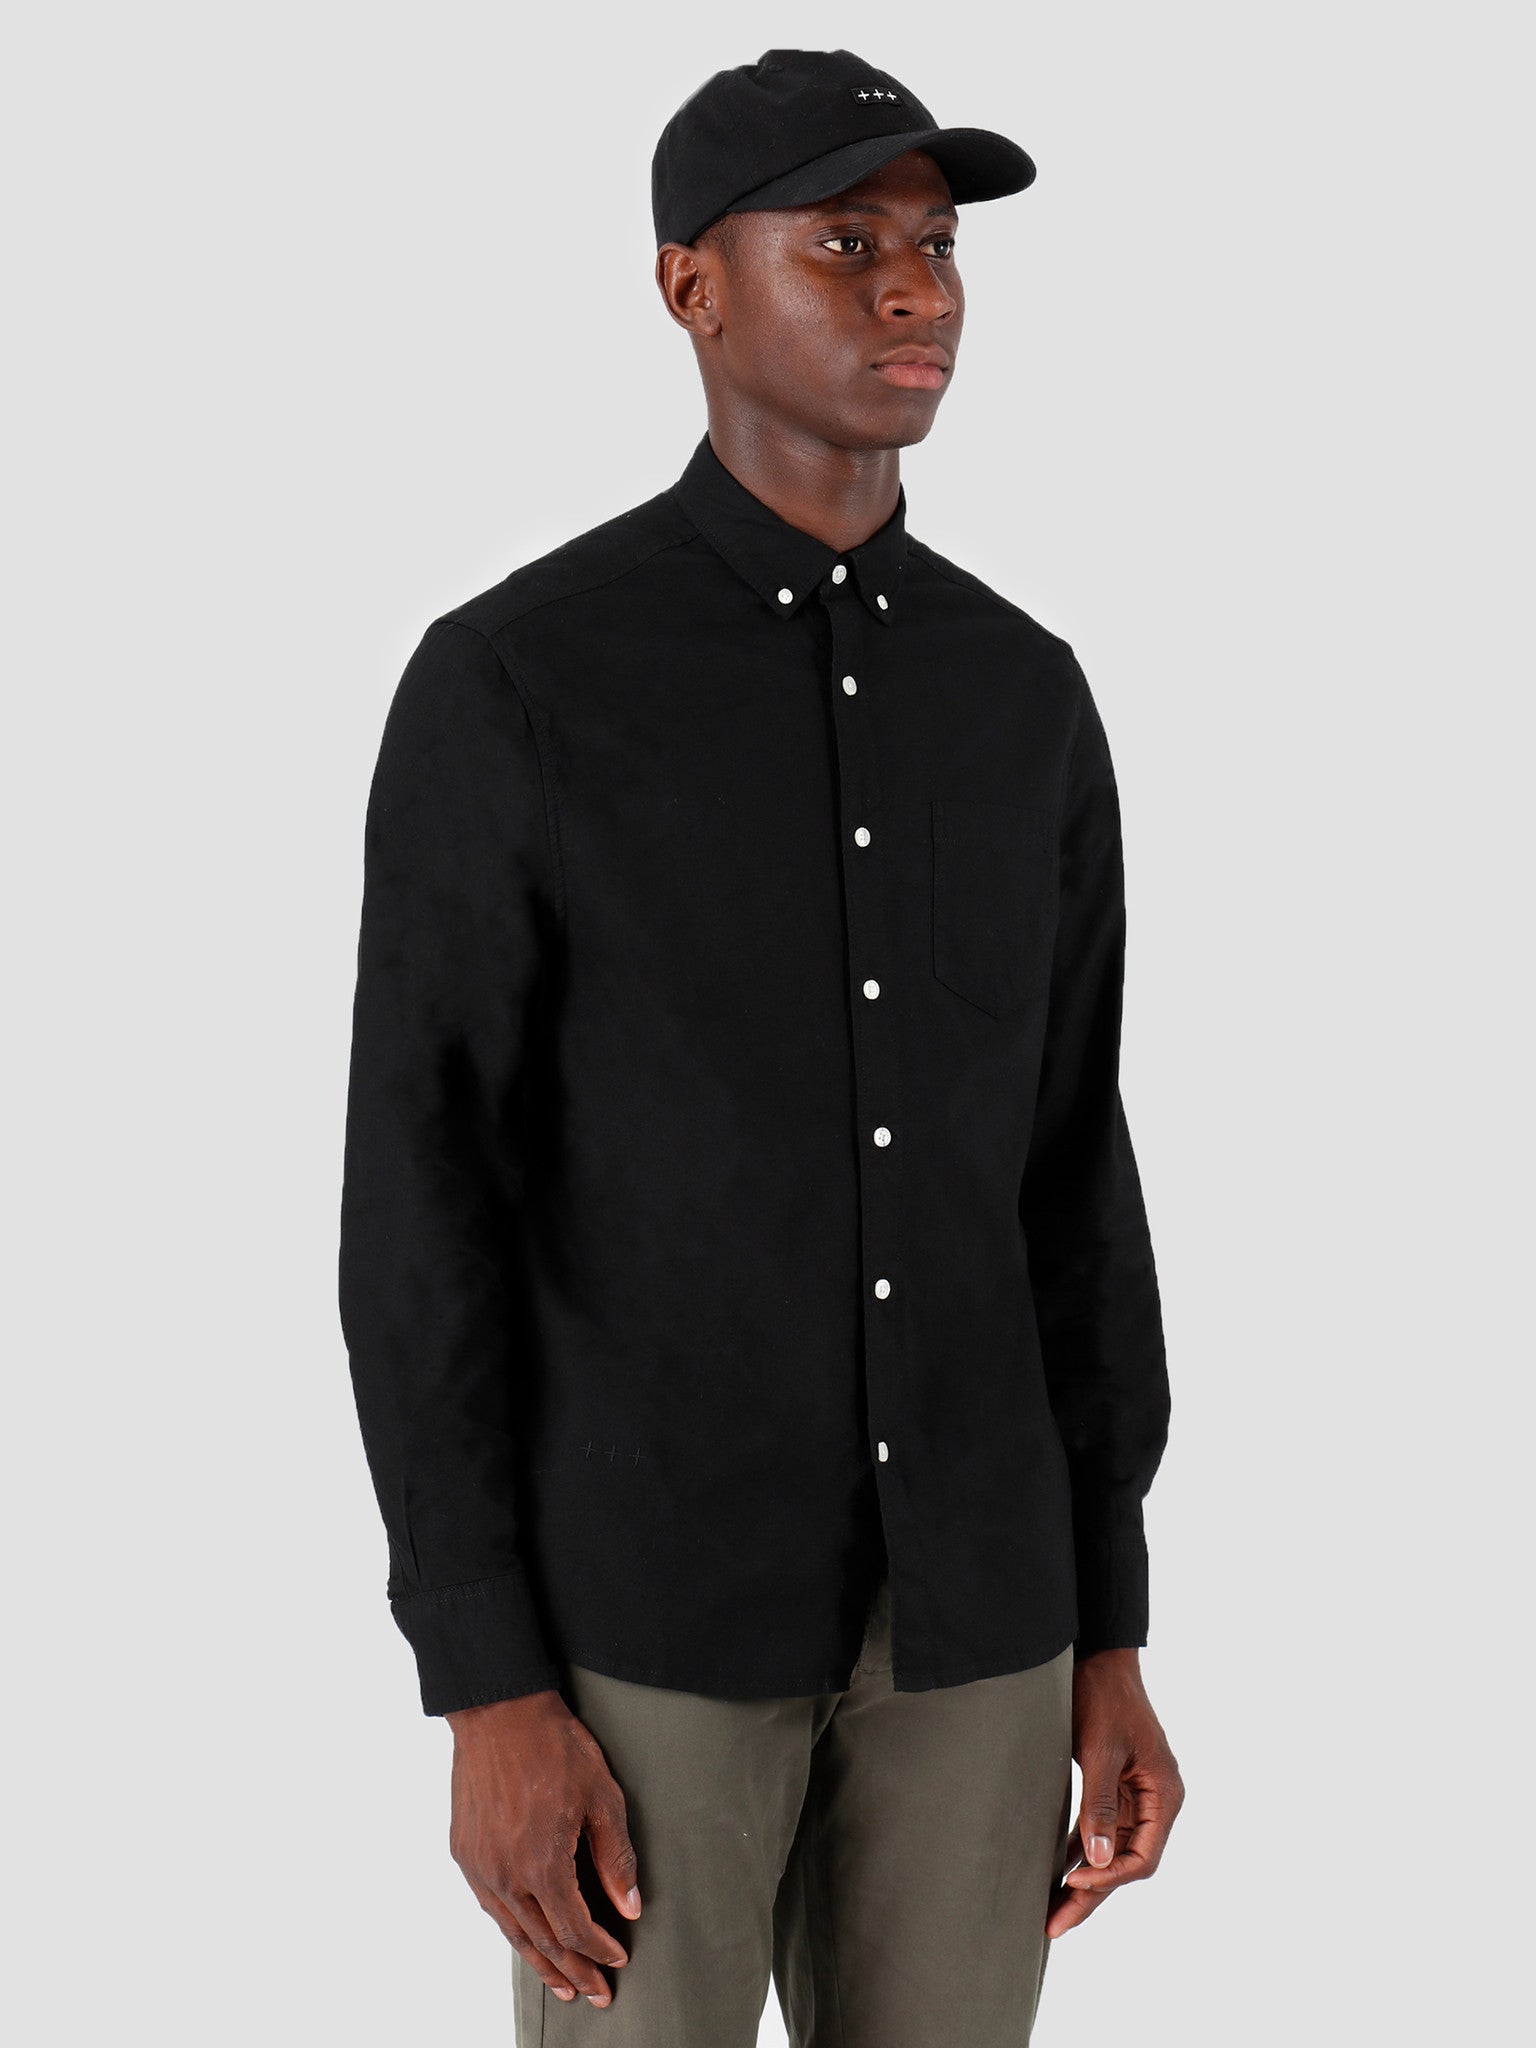 QB40 Oxford Shirt Black